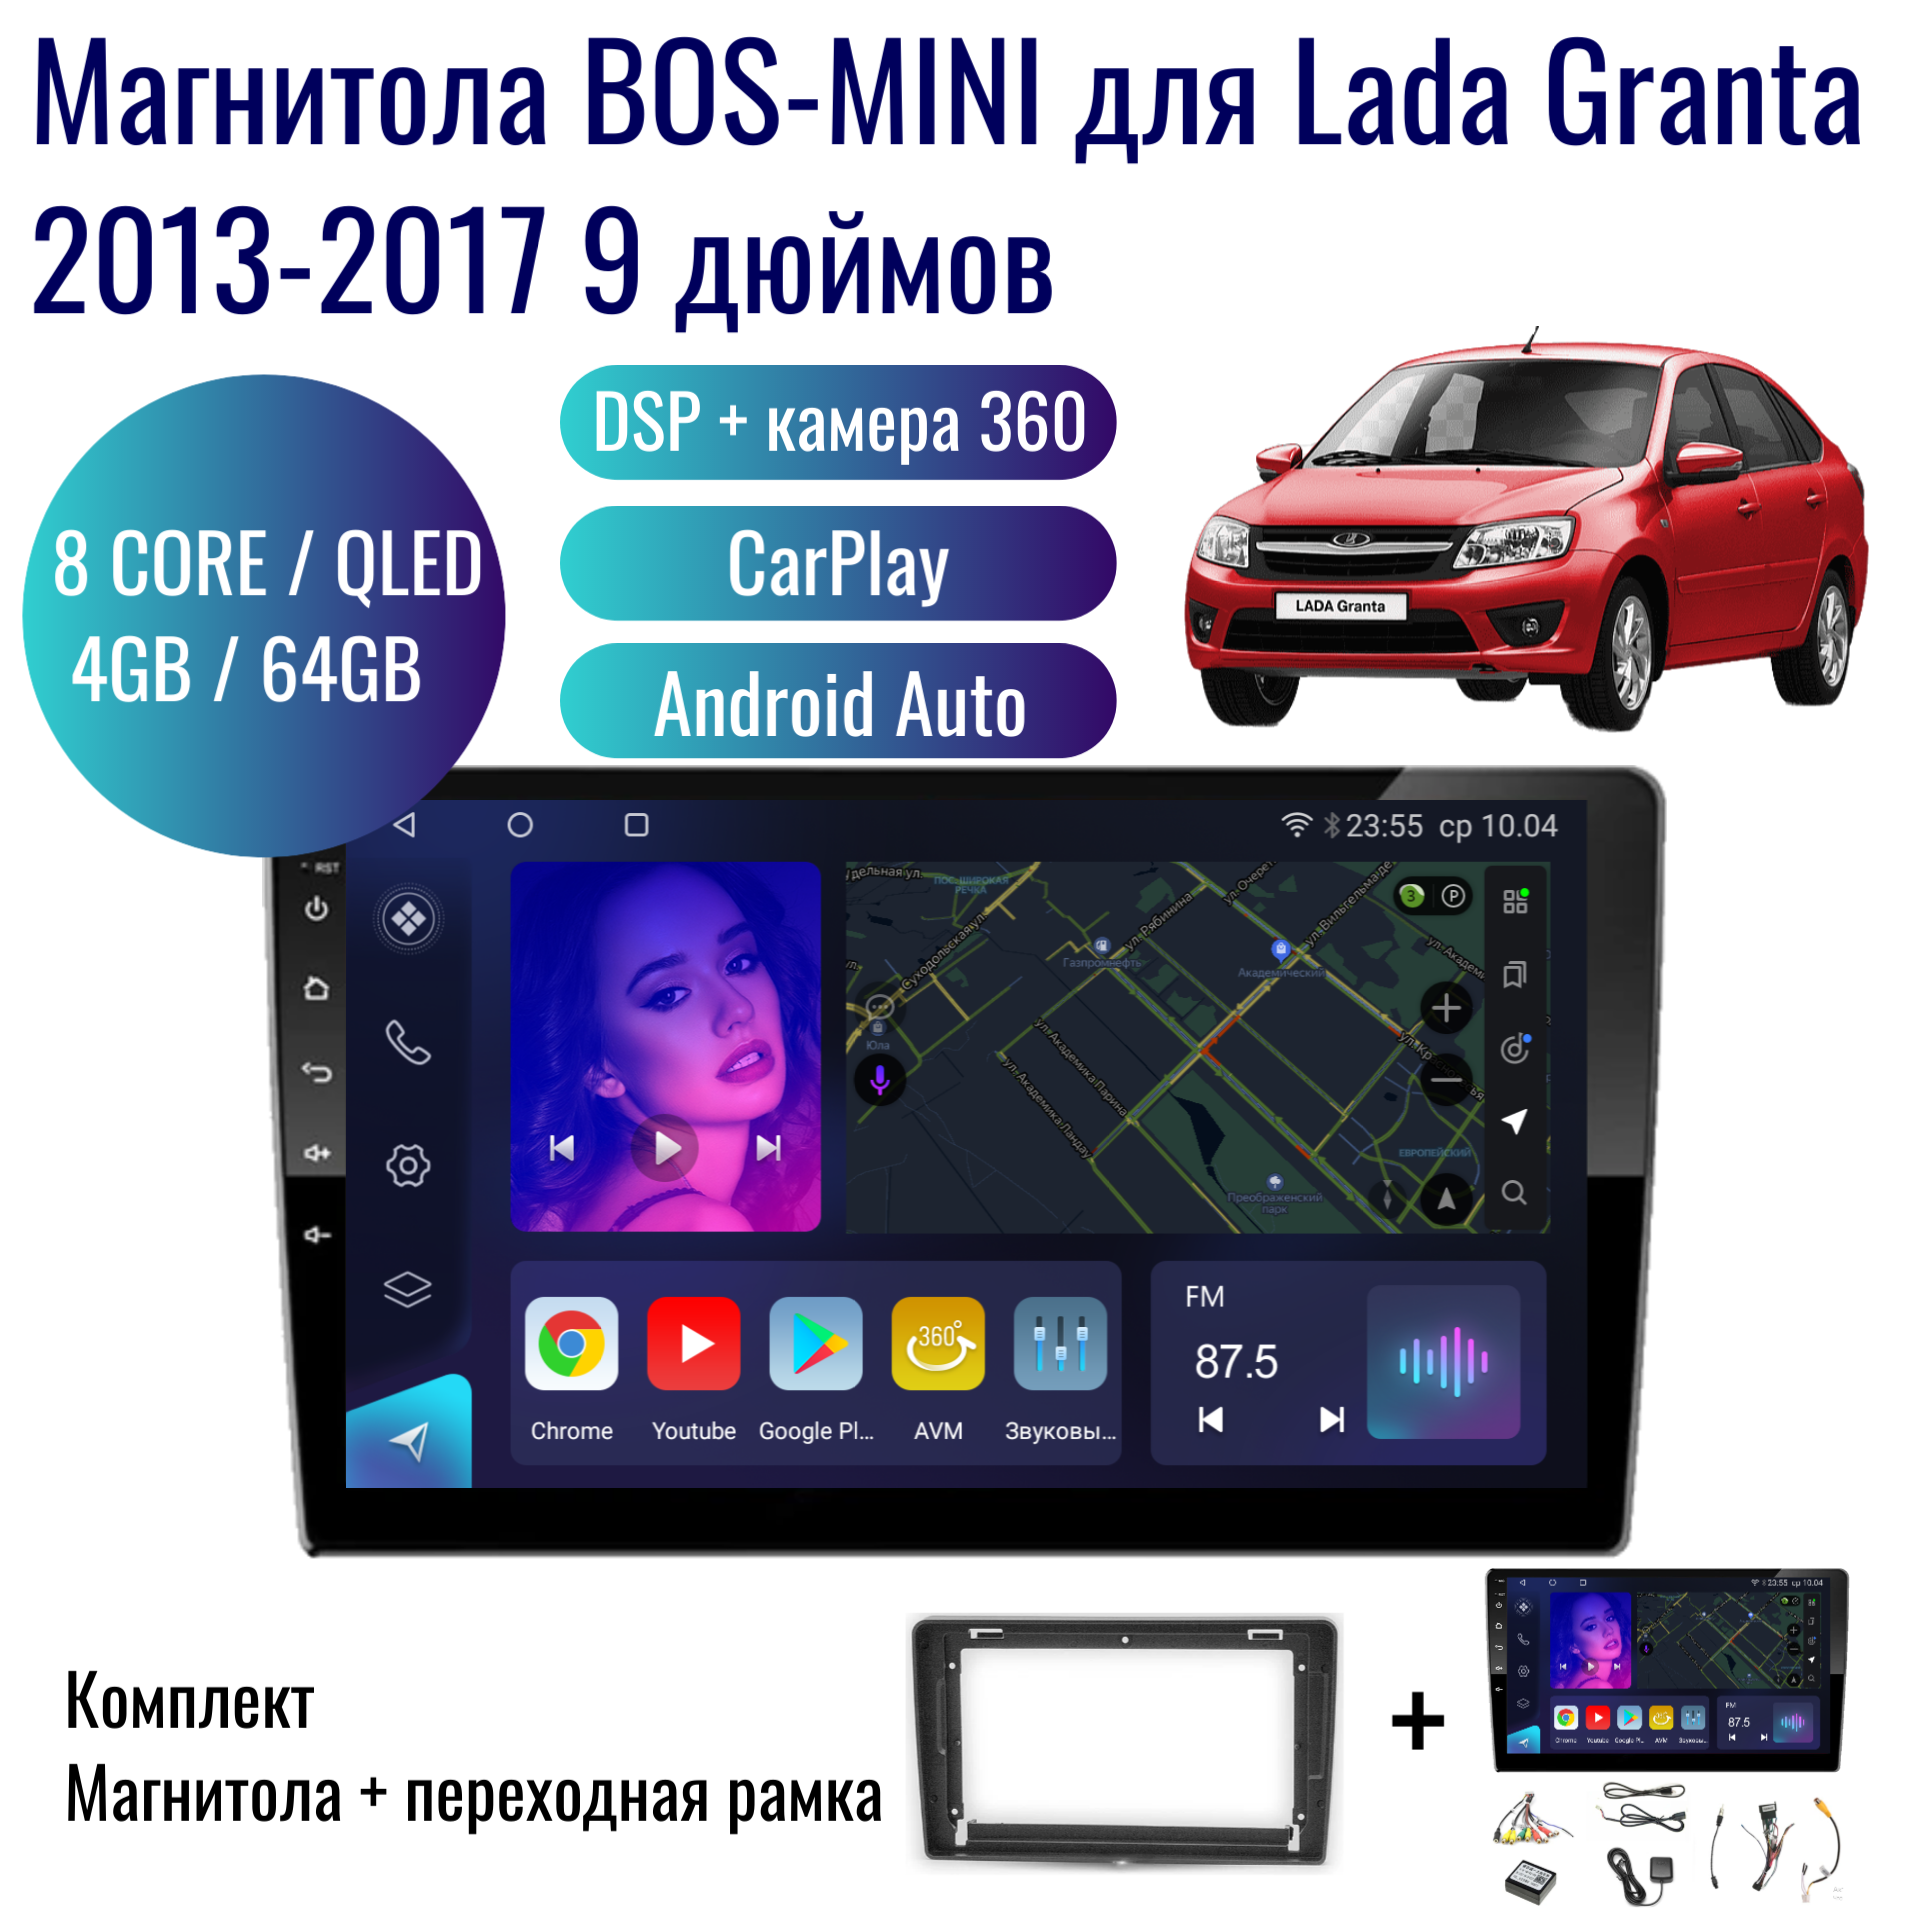 Автомагнитола BOS-MINI Android Lada Granta 2013-2017 / 8 ядер 4Gb+64Gb /9 дюймов/GPS/Bluetooth/Wi-Fi/2din/навигатор/CarPlay AndroidAuto